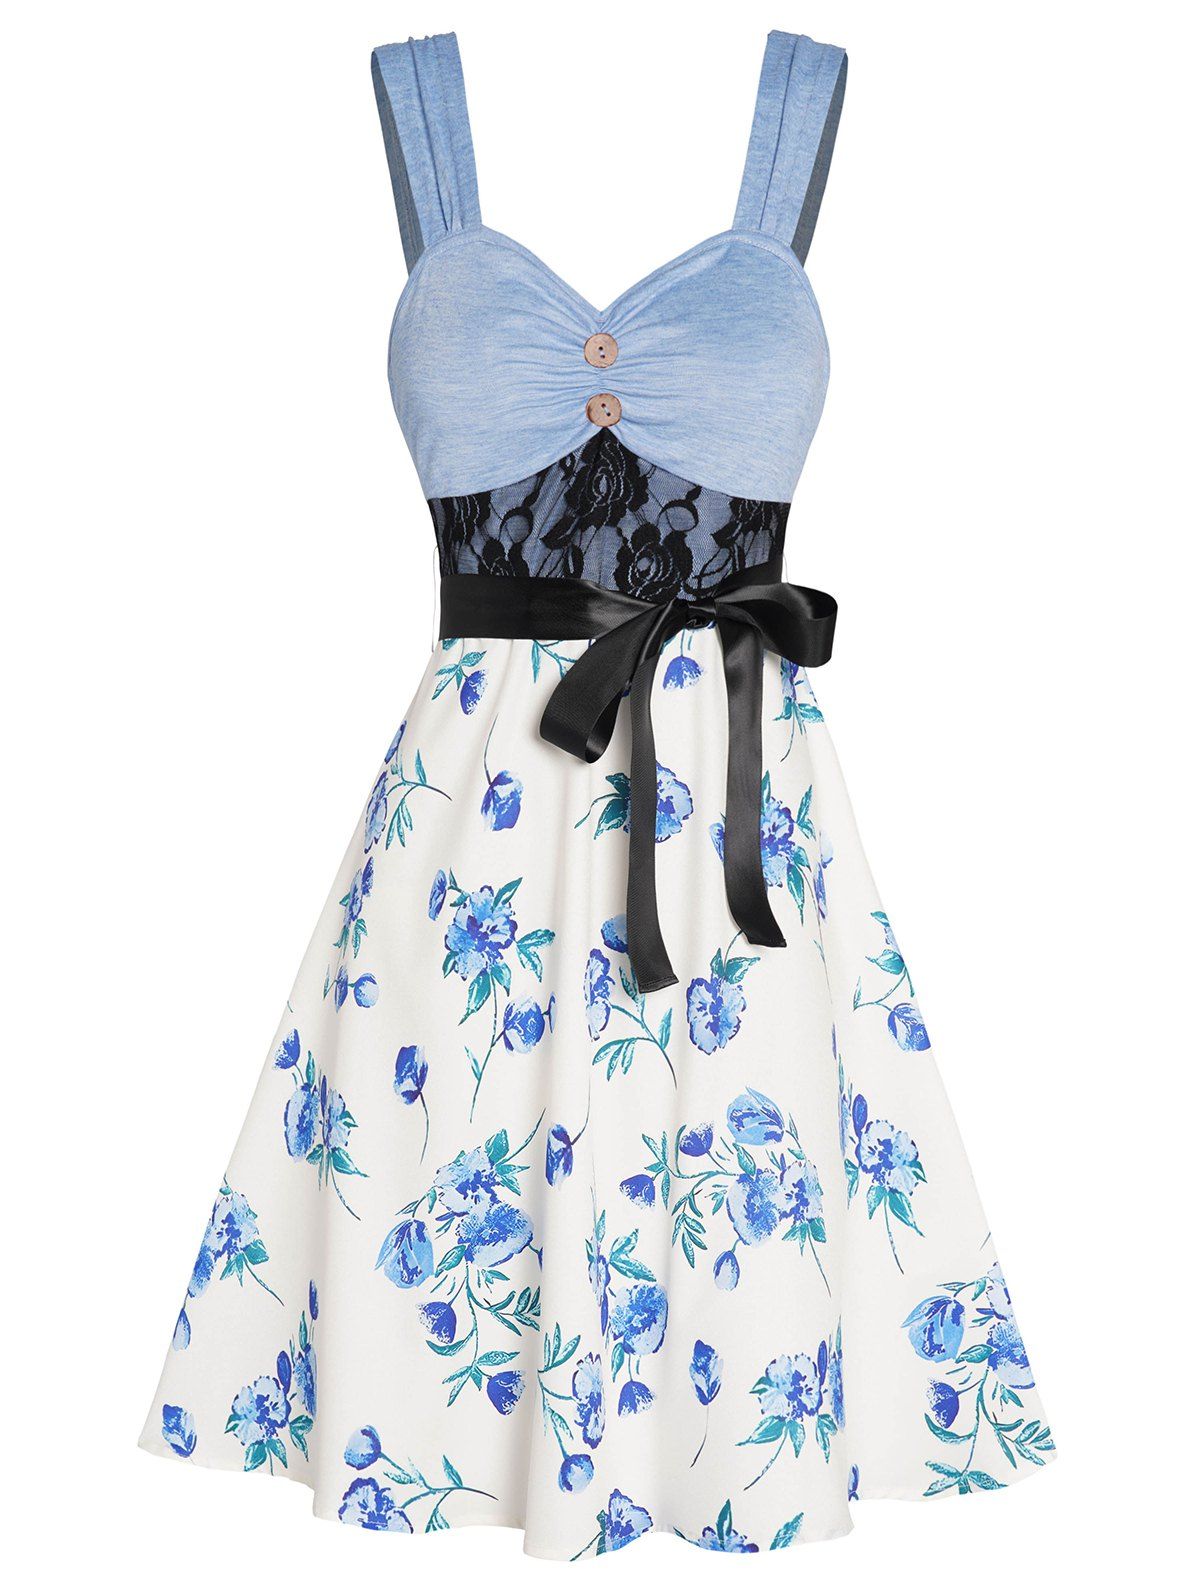 Colorblock Flower Print Dress Lace Panel Empire Waist Belted Mock Button A Line Mini Dress - LIGHT BLUE M